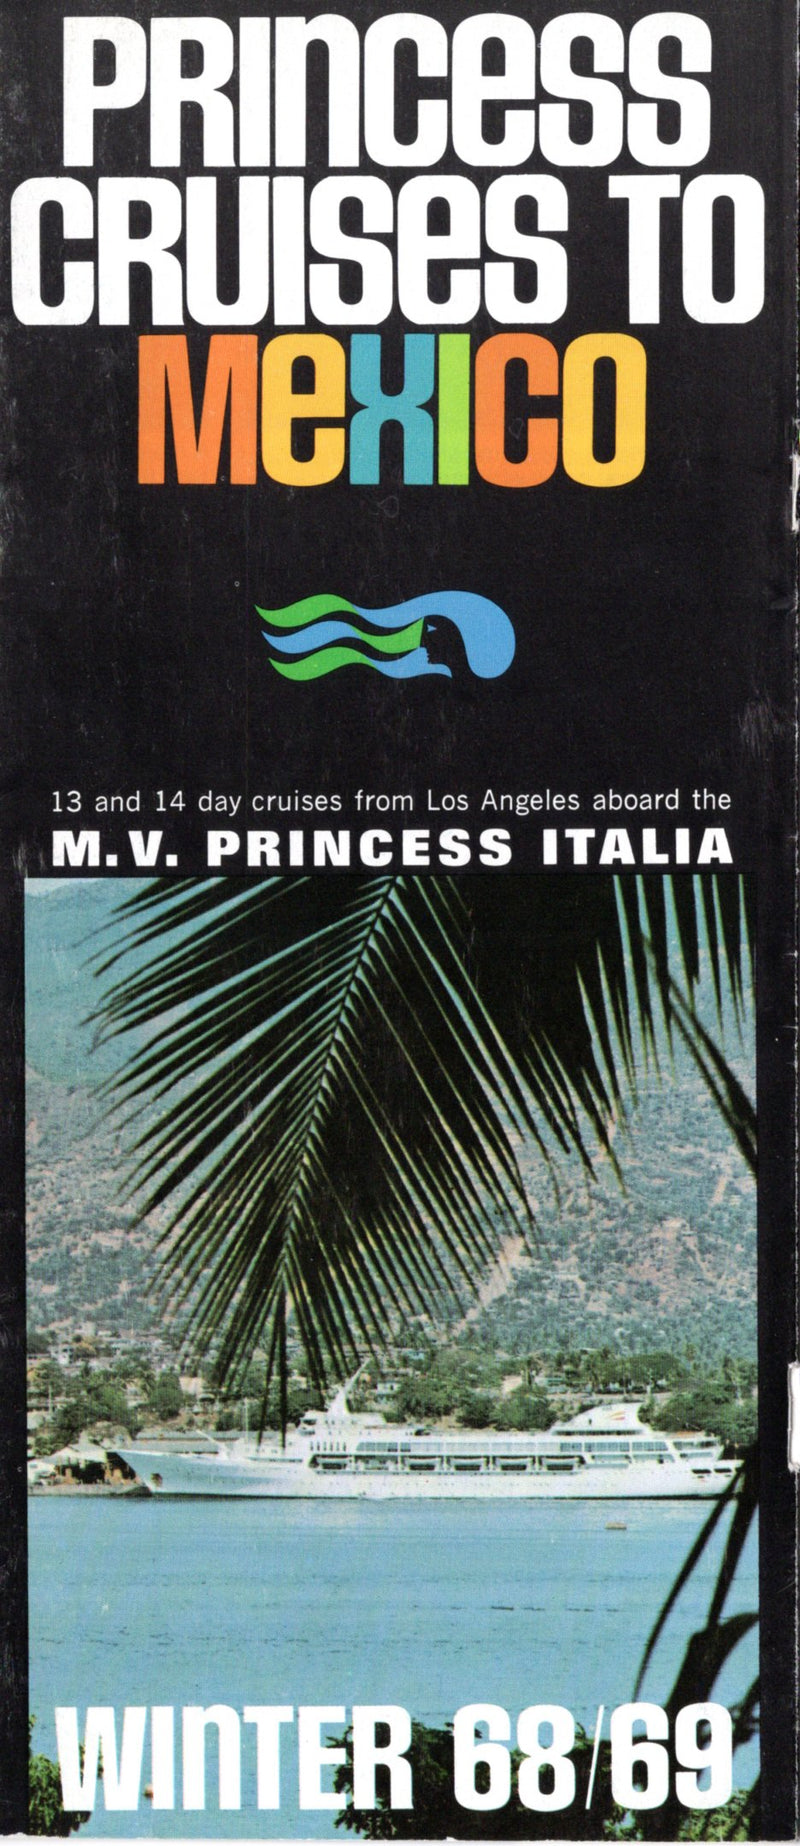 PRINCESS ITALIA: 1967 - Princess Cruises 1968-69 brochure w/ "Seawitch" logo